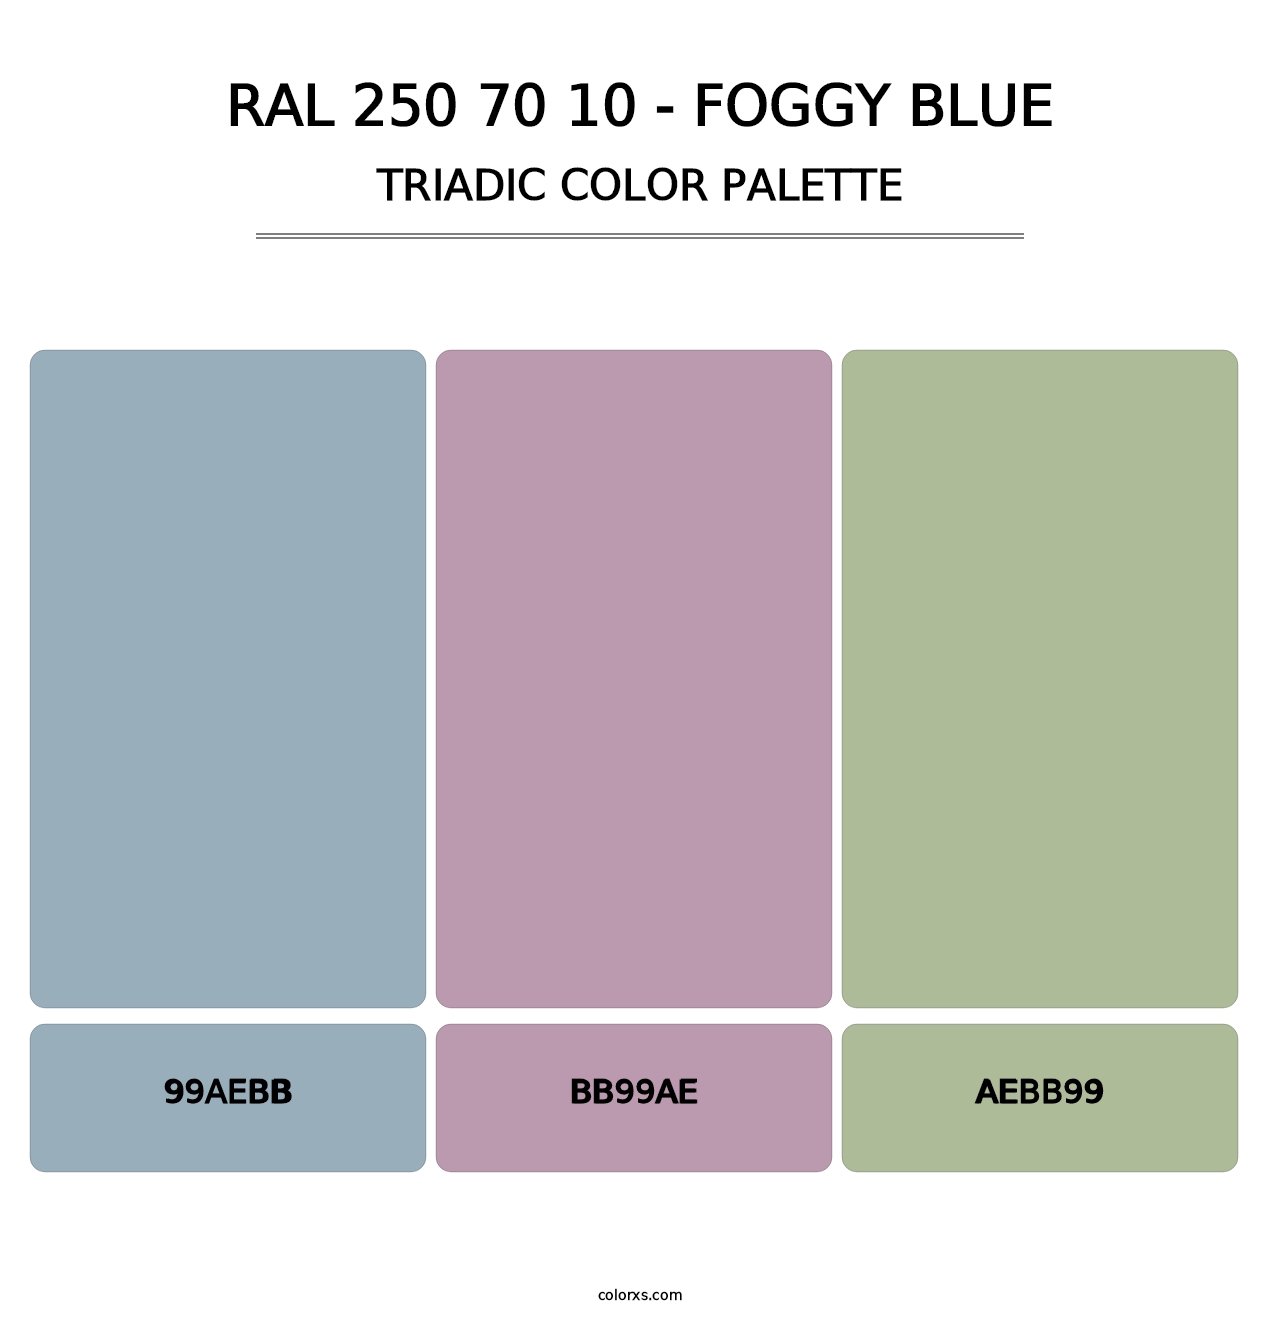 RAL 250 70 10 - Foggy Blue - Triadic Color Palette